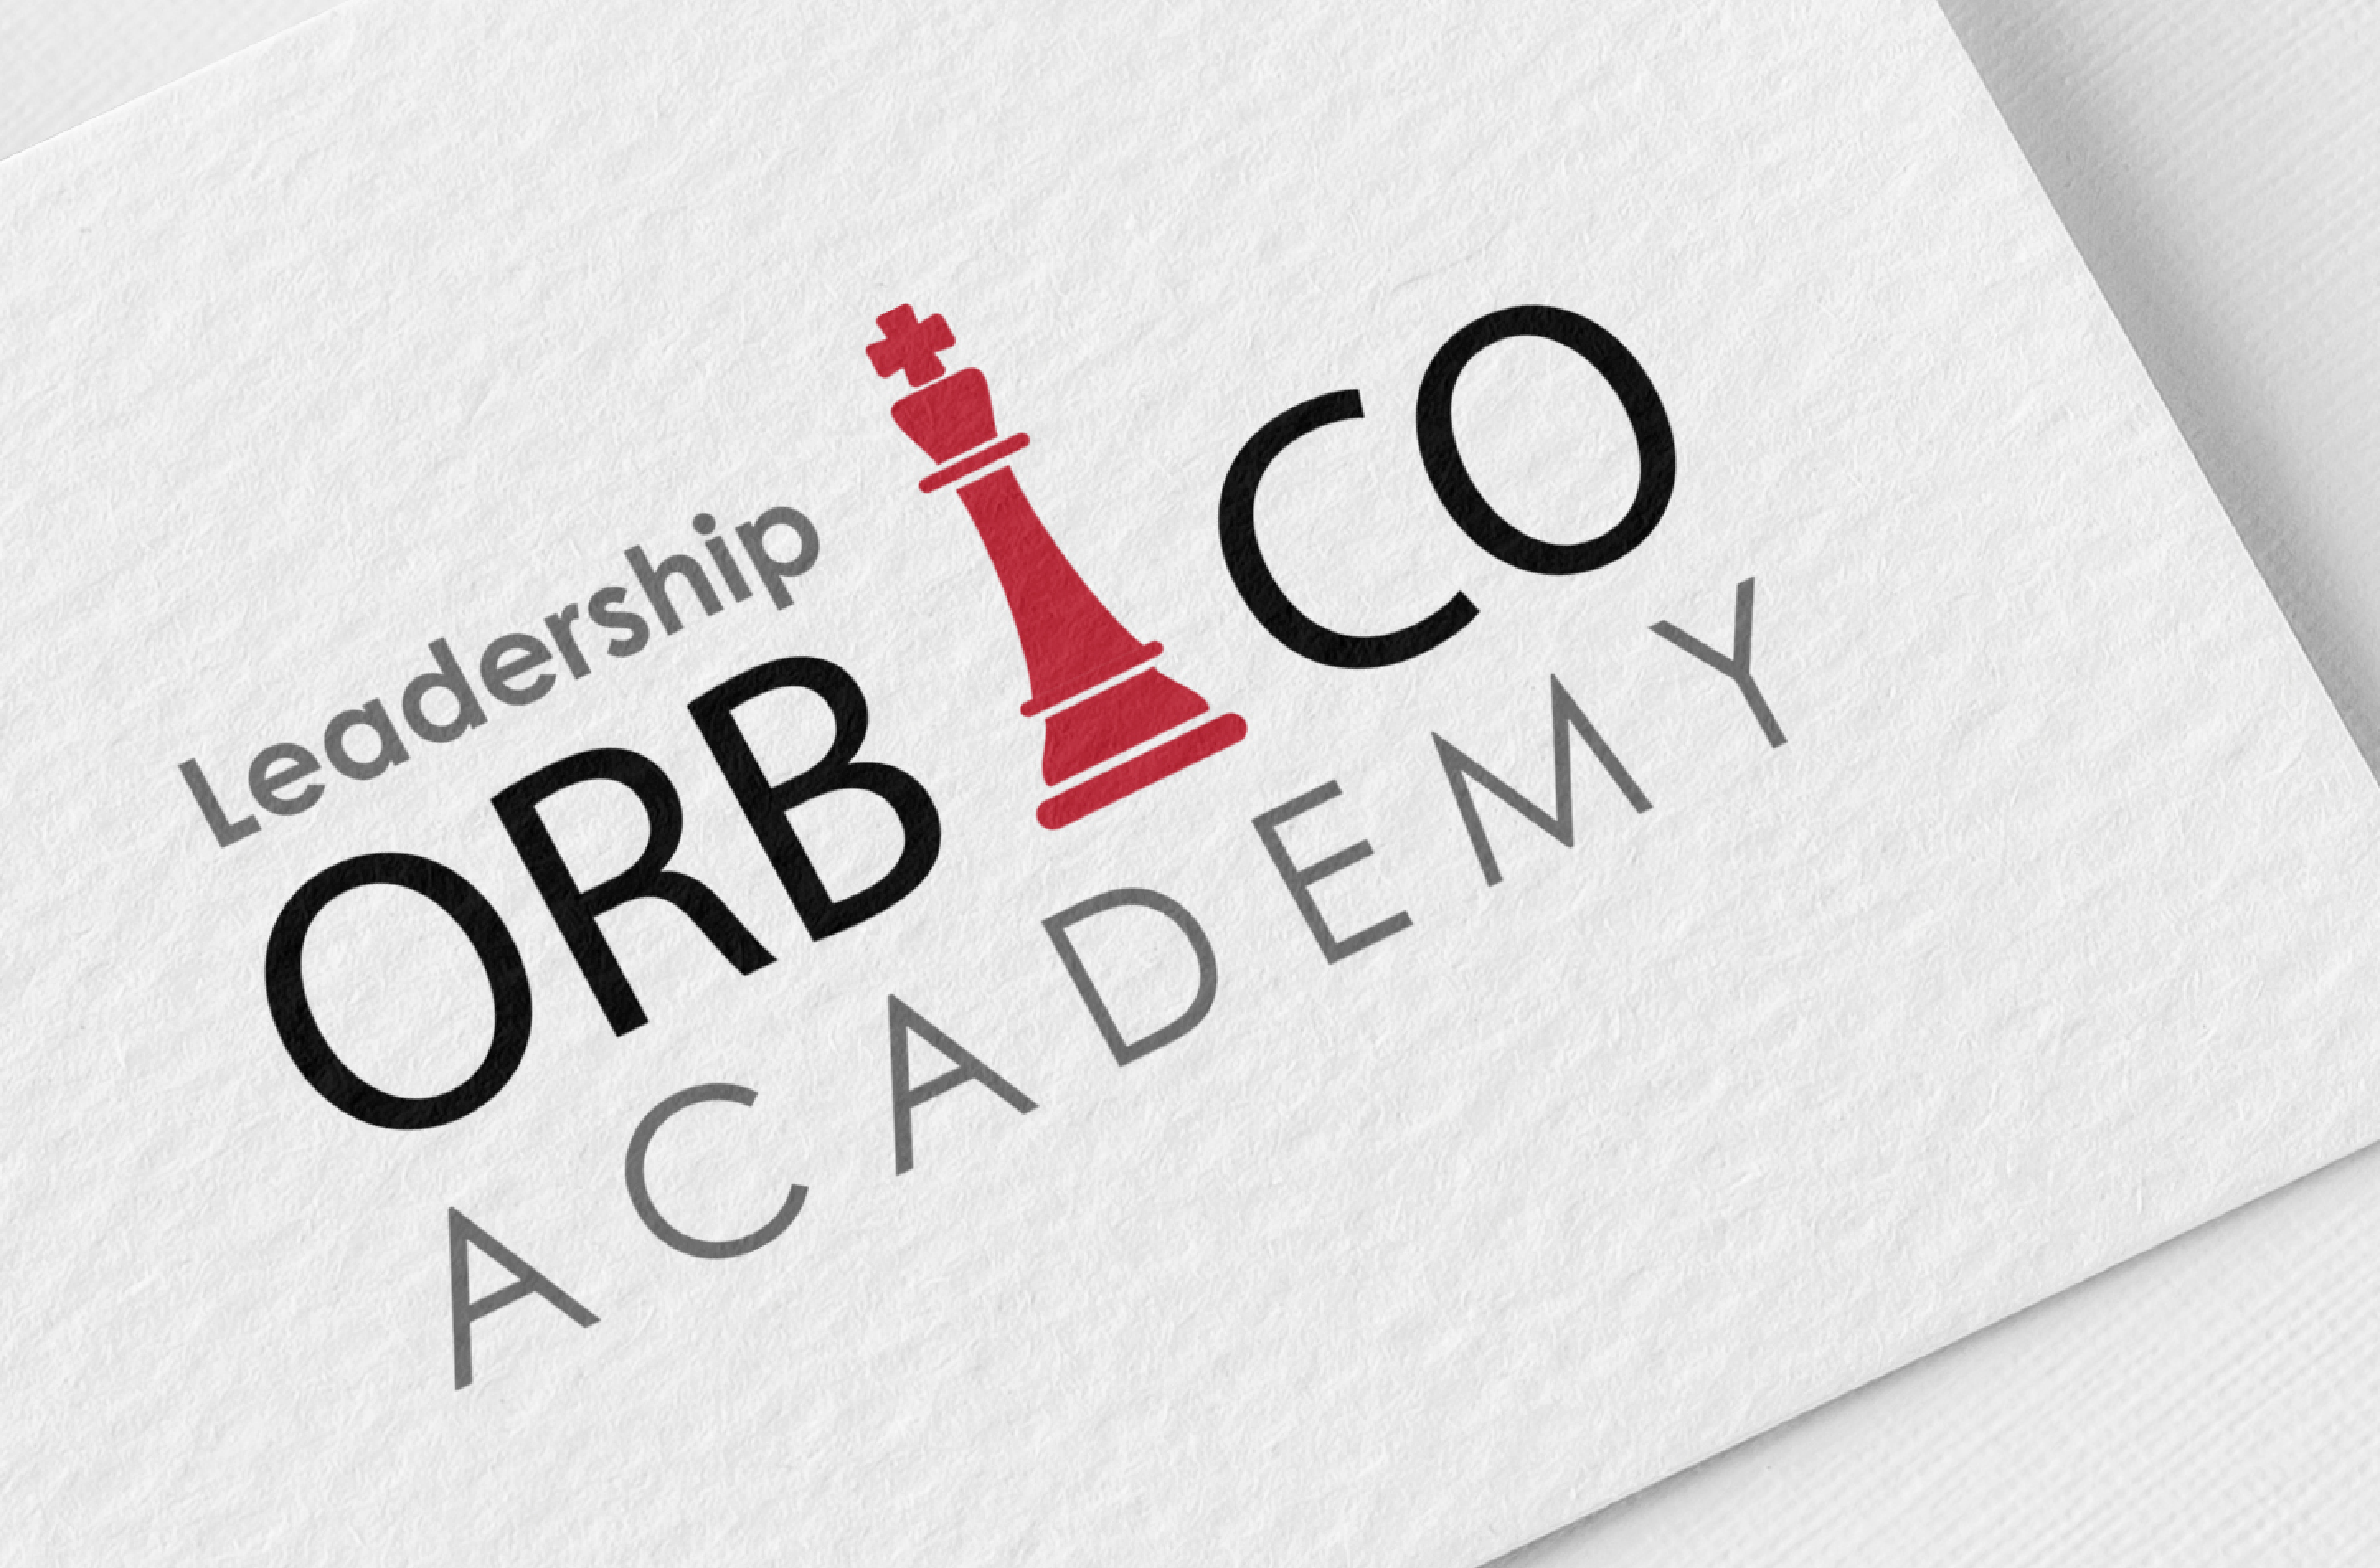 Orbico Academy logo